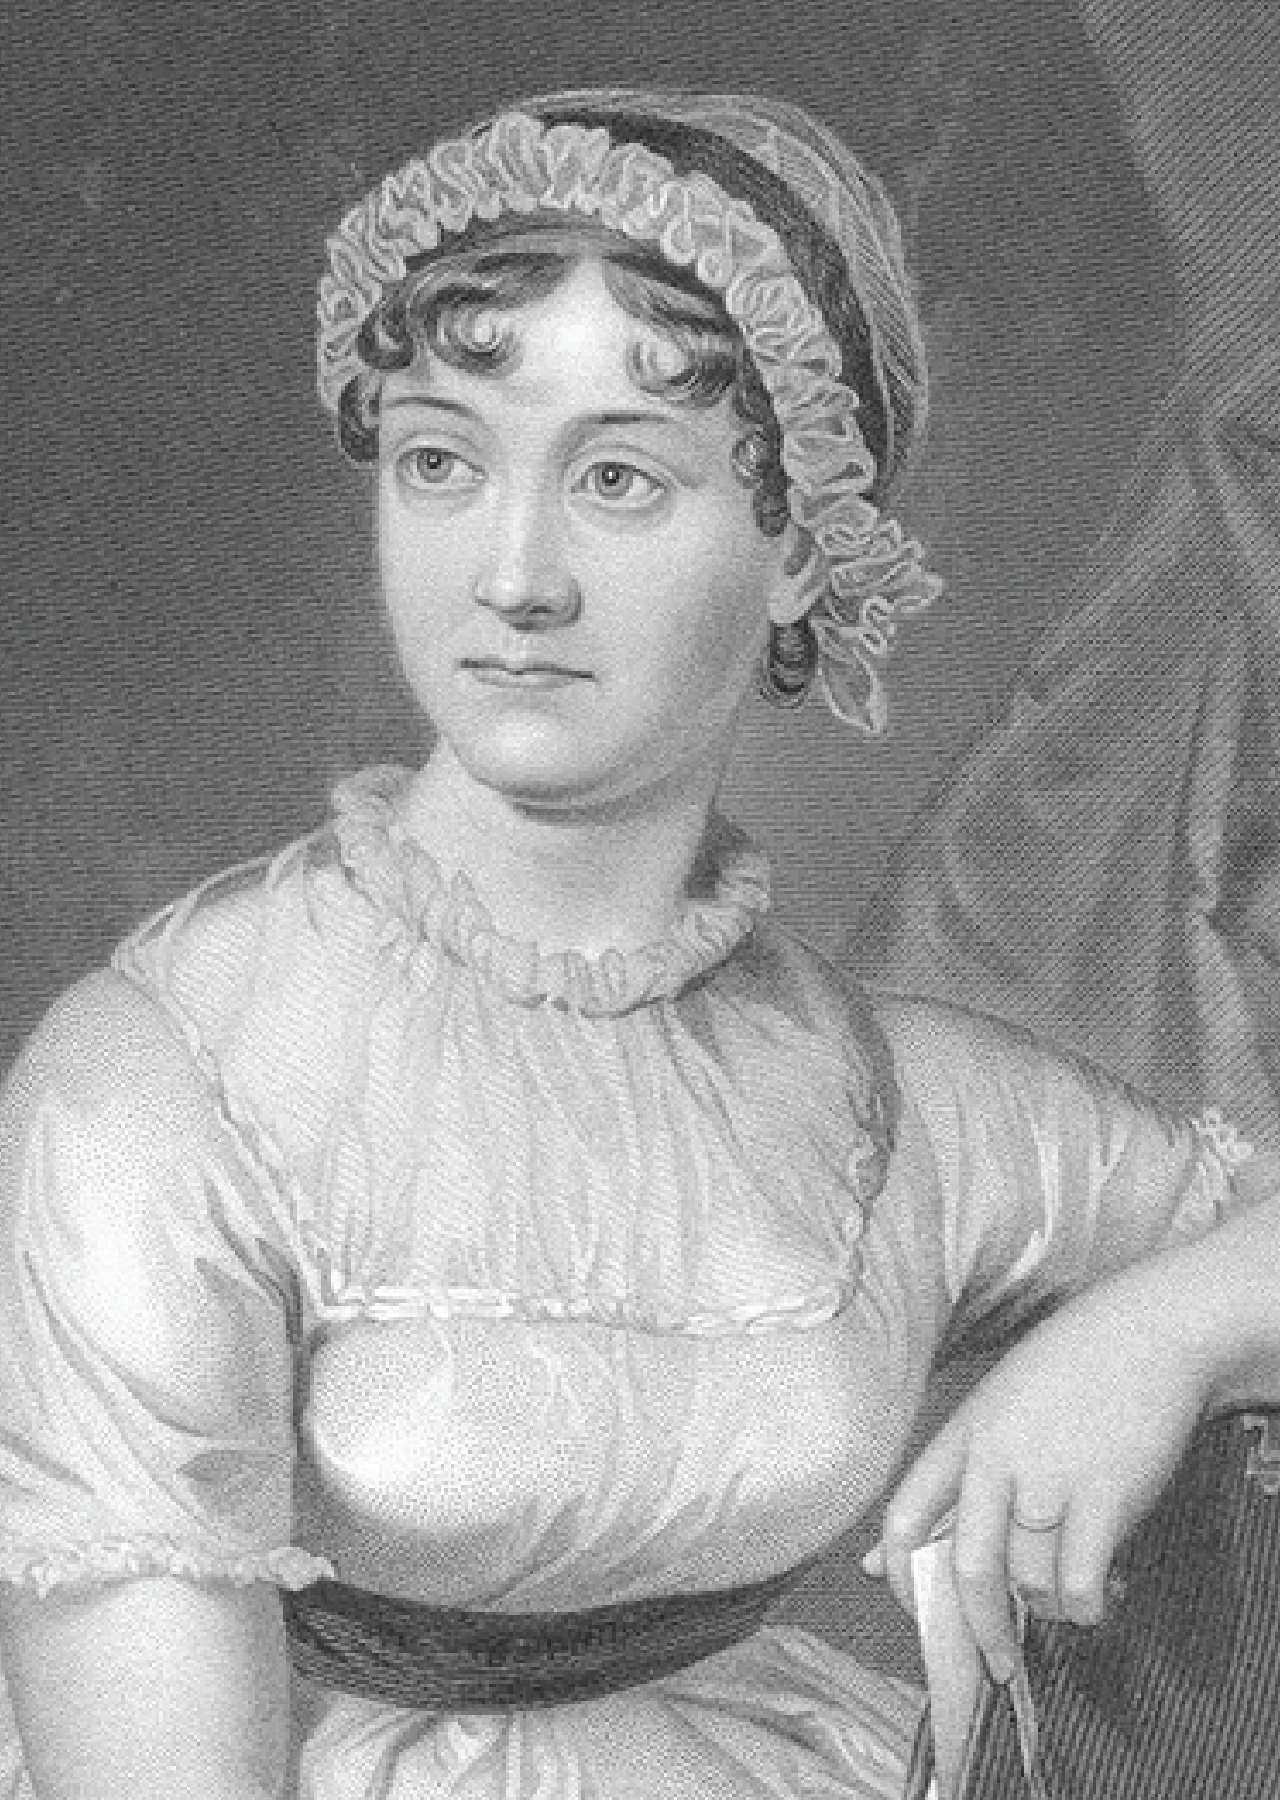 Portrait of Jane Austen. Photo courtesy of the University of Texas Libraries, The University of Texas at Austin.